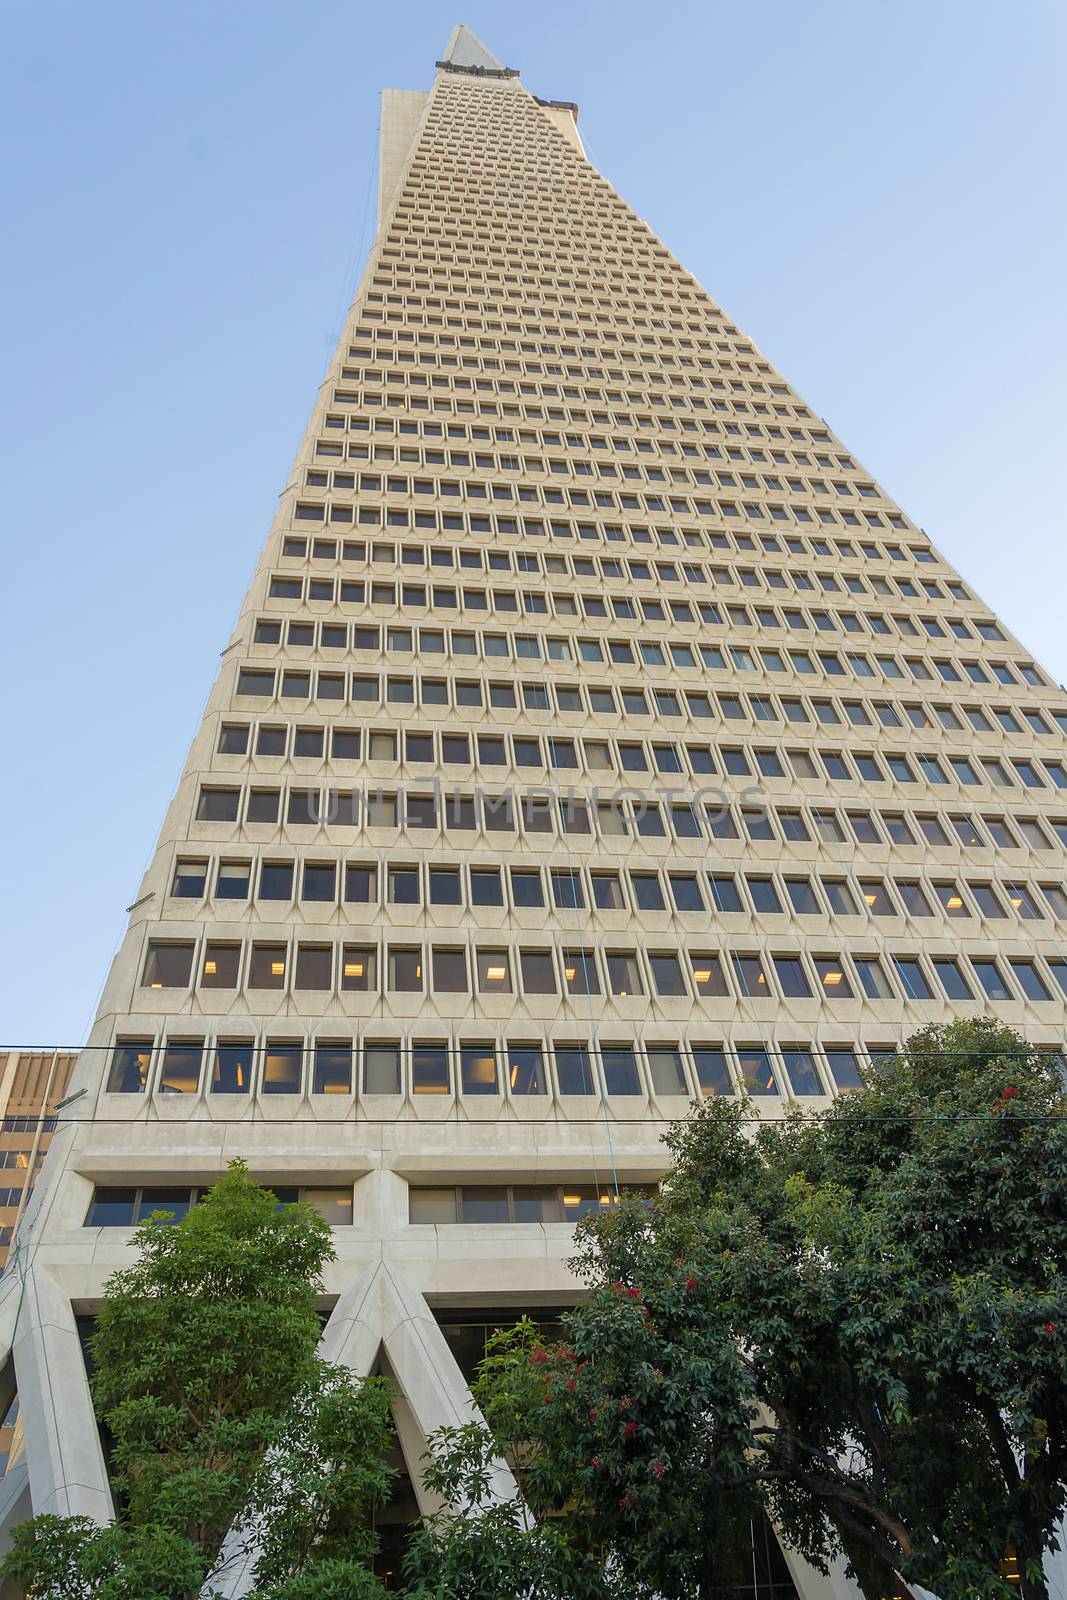 San Francisco, Ca, USA, October 22, 2016: Bottom view of the Transamerica Pyramid